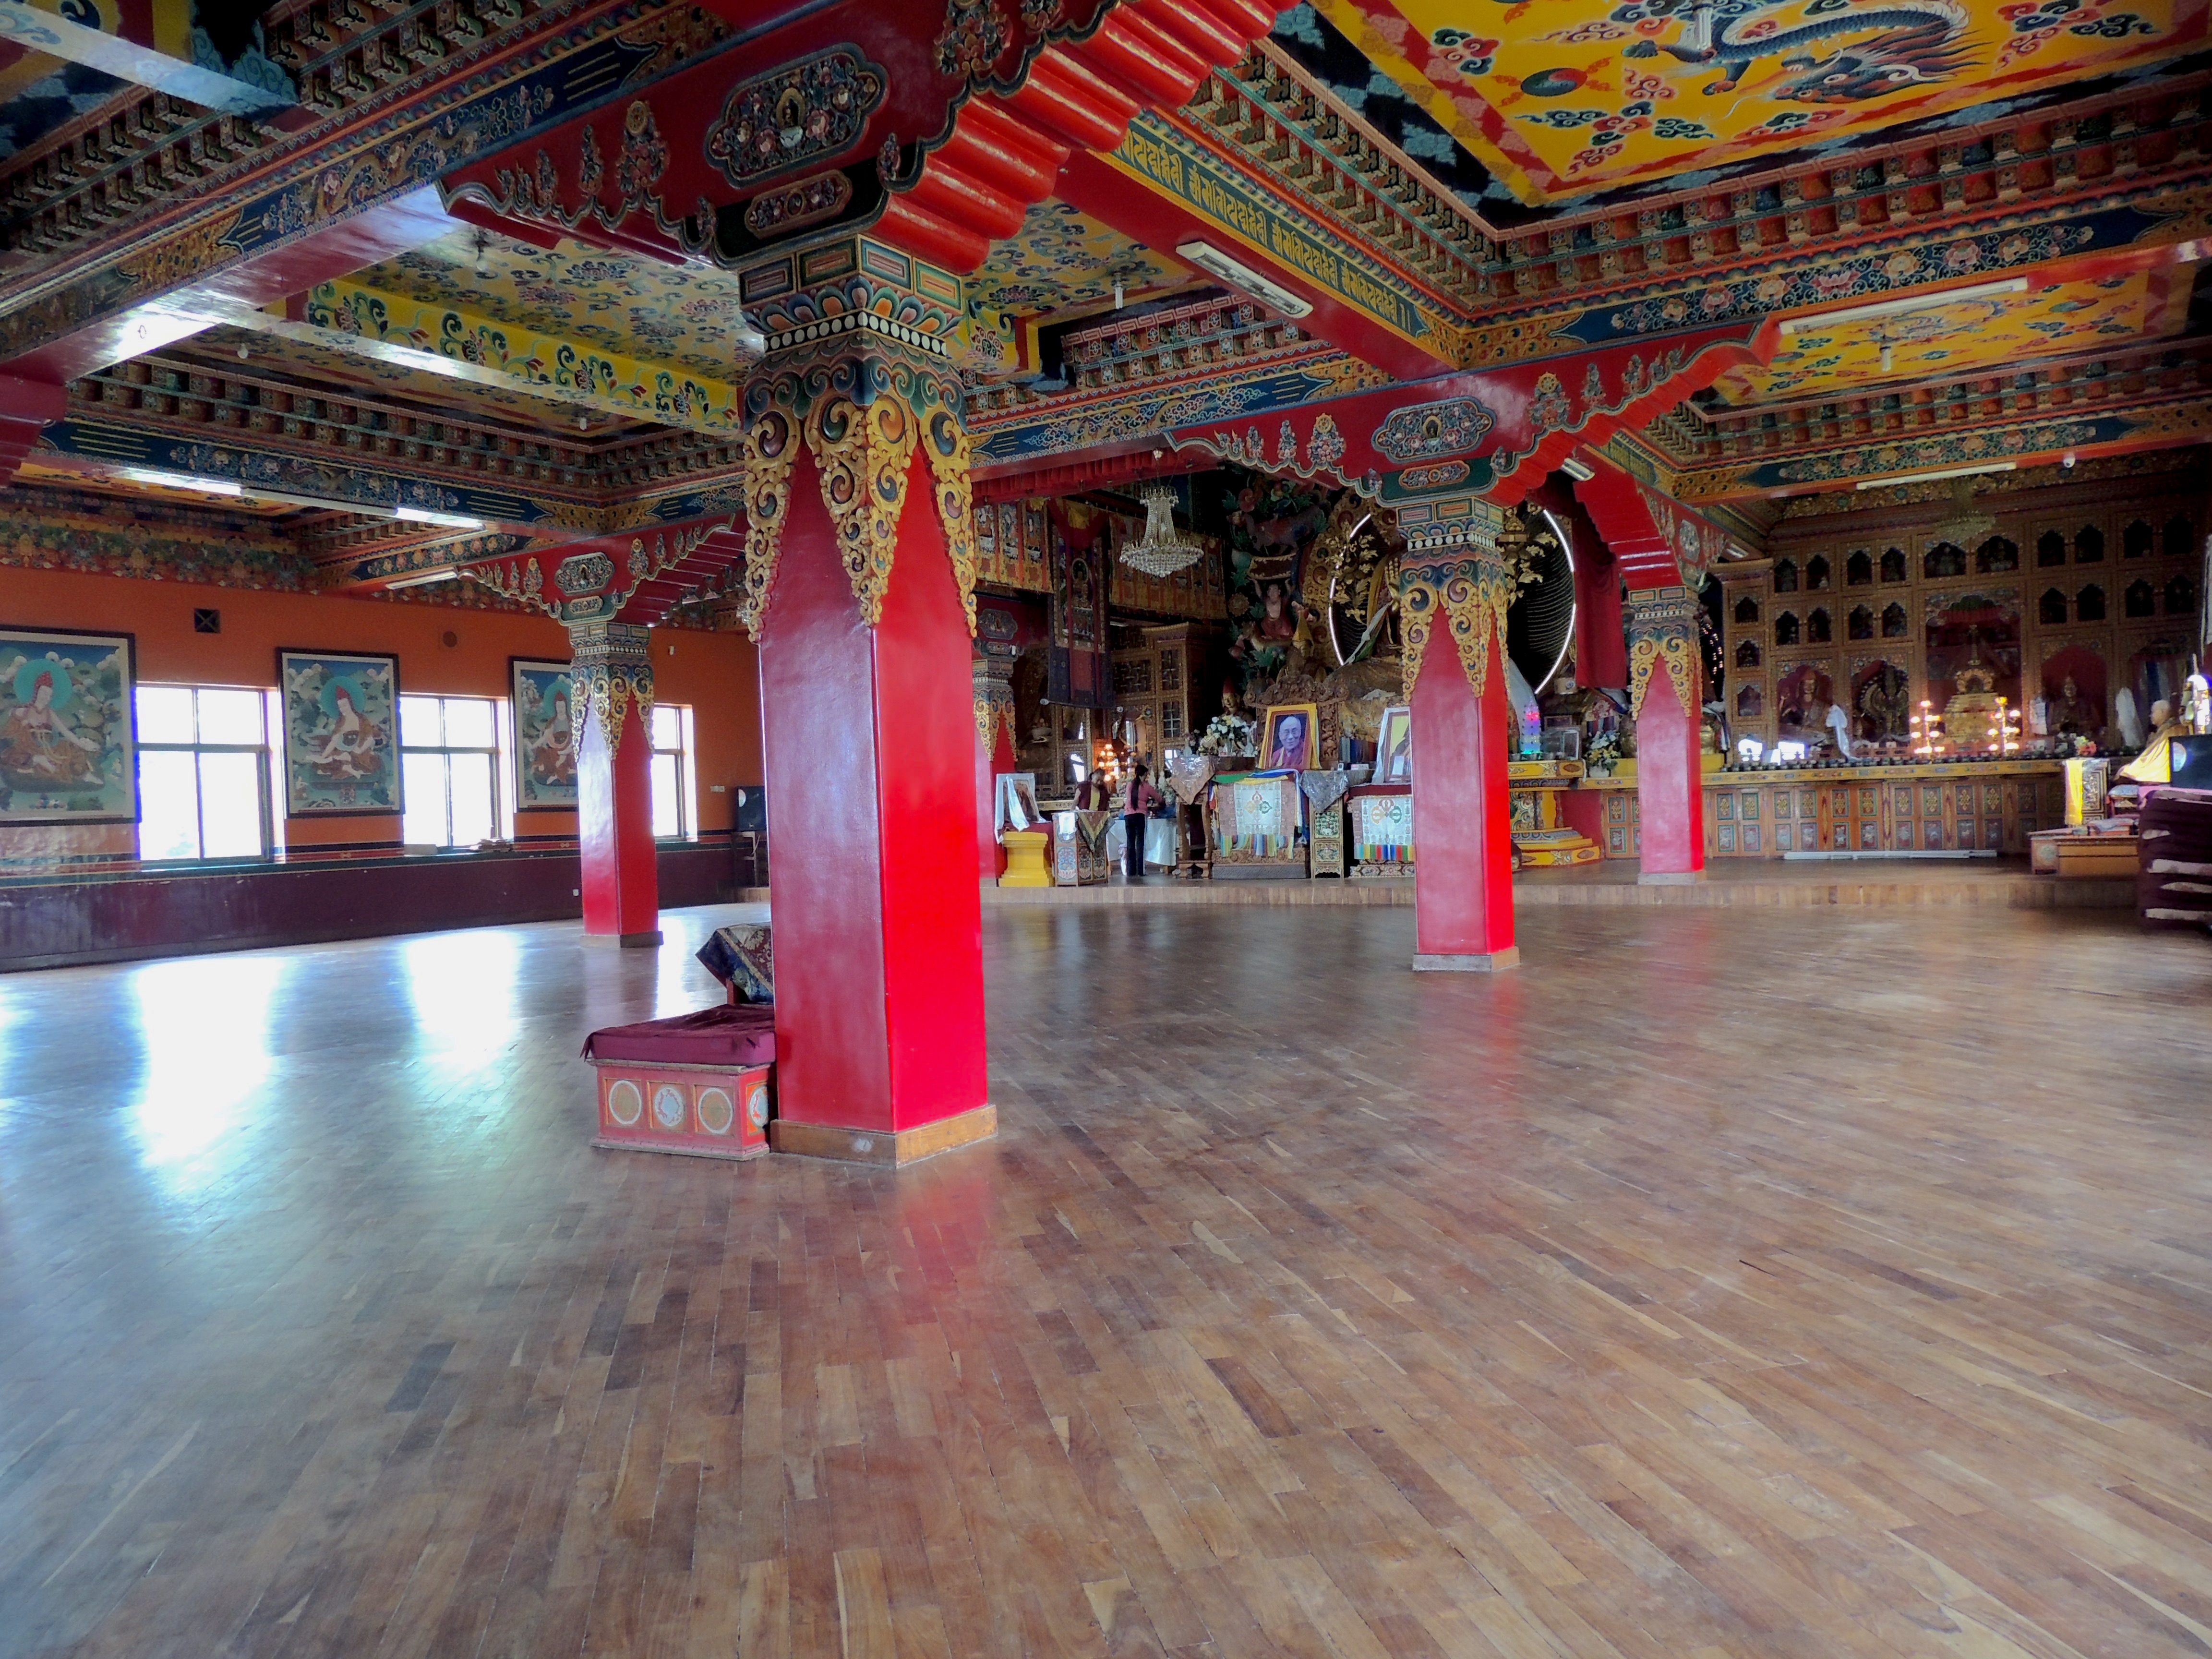 The meditation hall